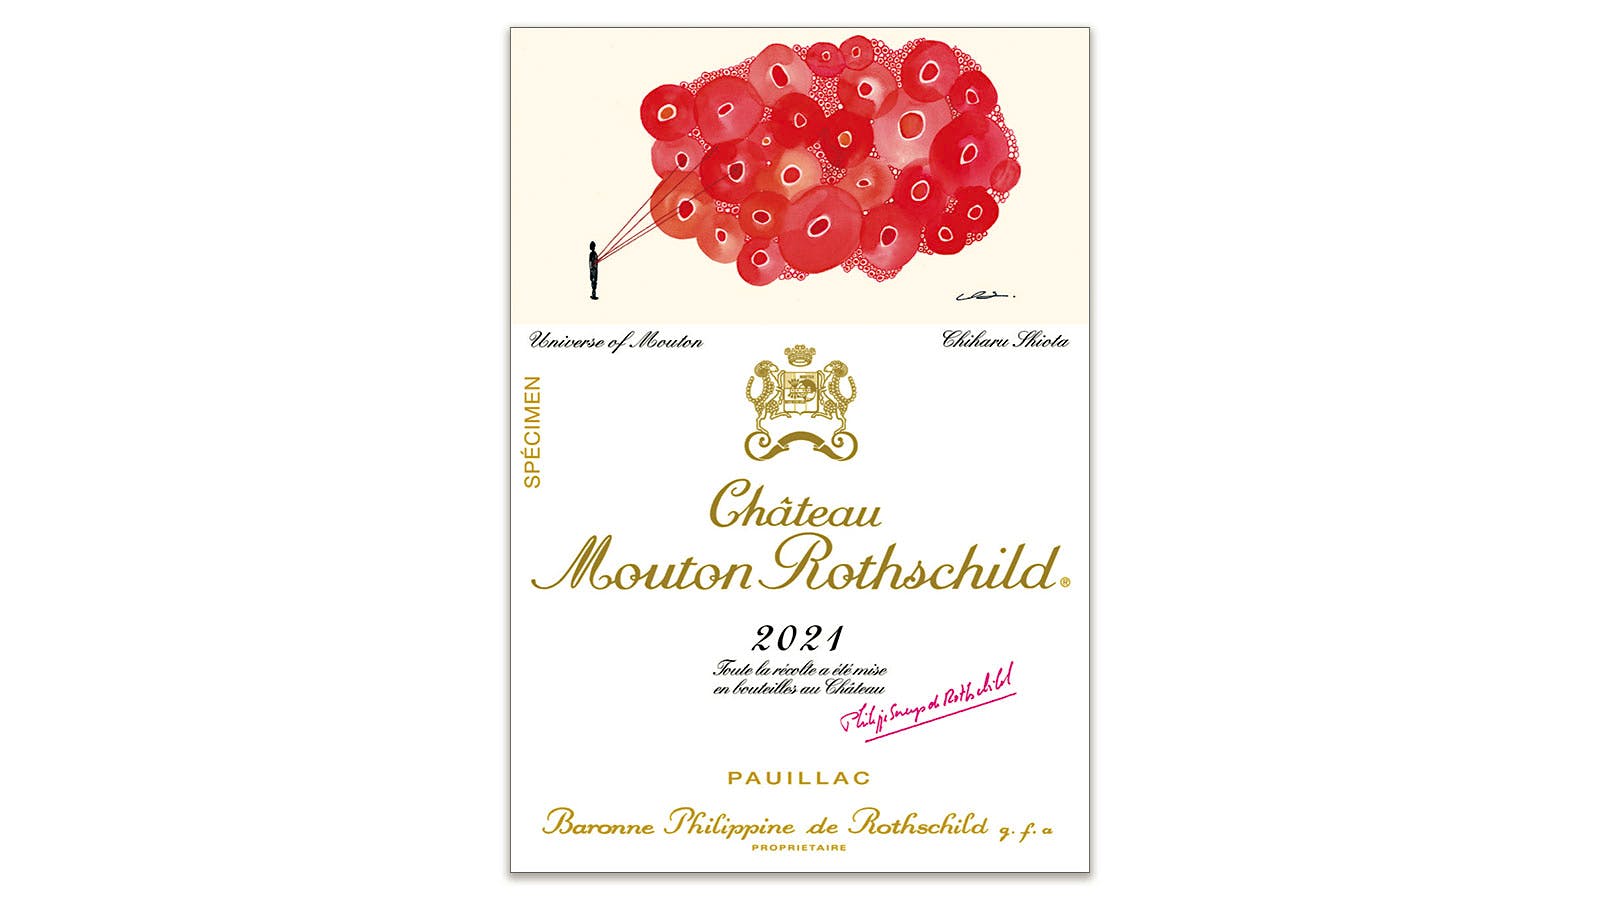 Mouton Rothschild's 2021 label